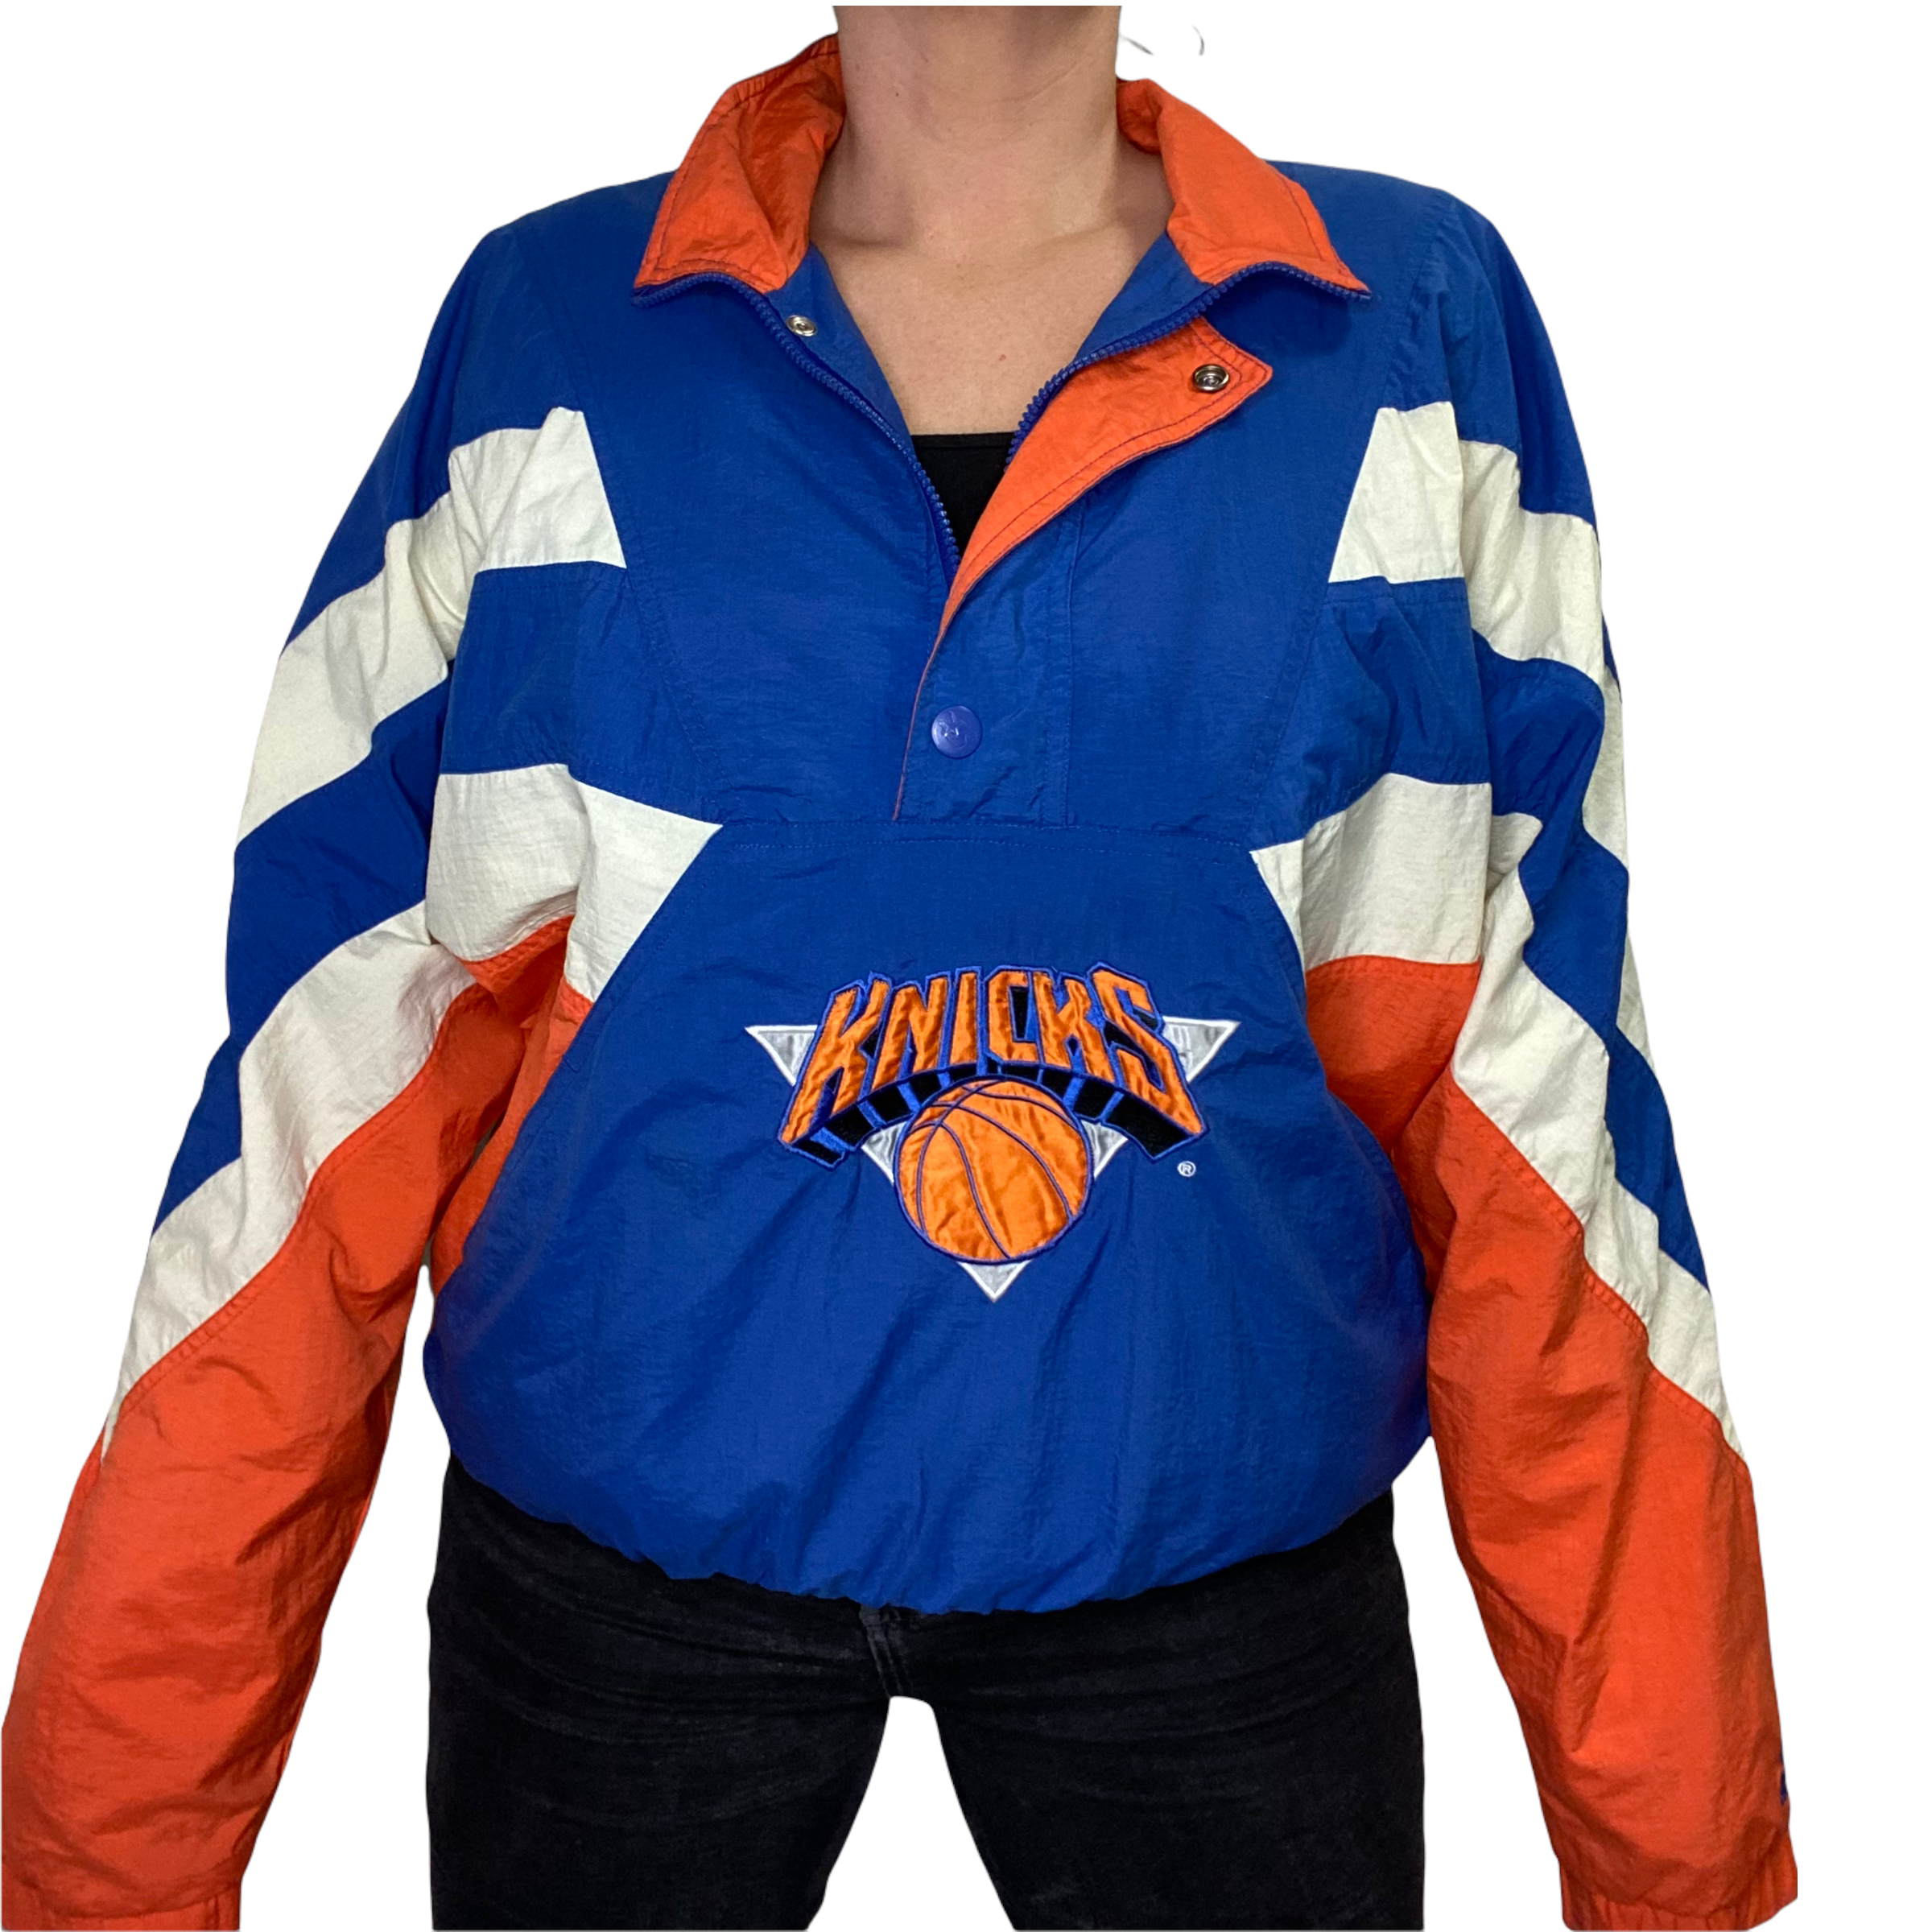 Vintage 90s New York Knicks Starter Jersey Mens Large 